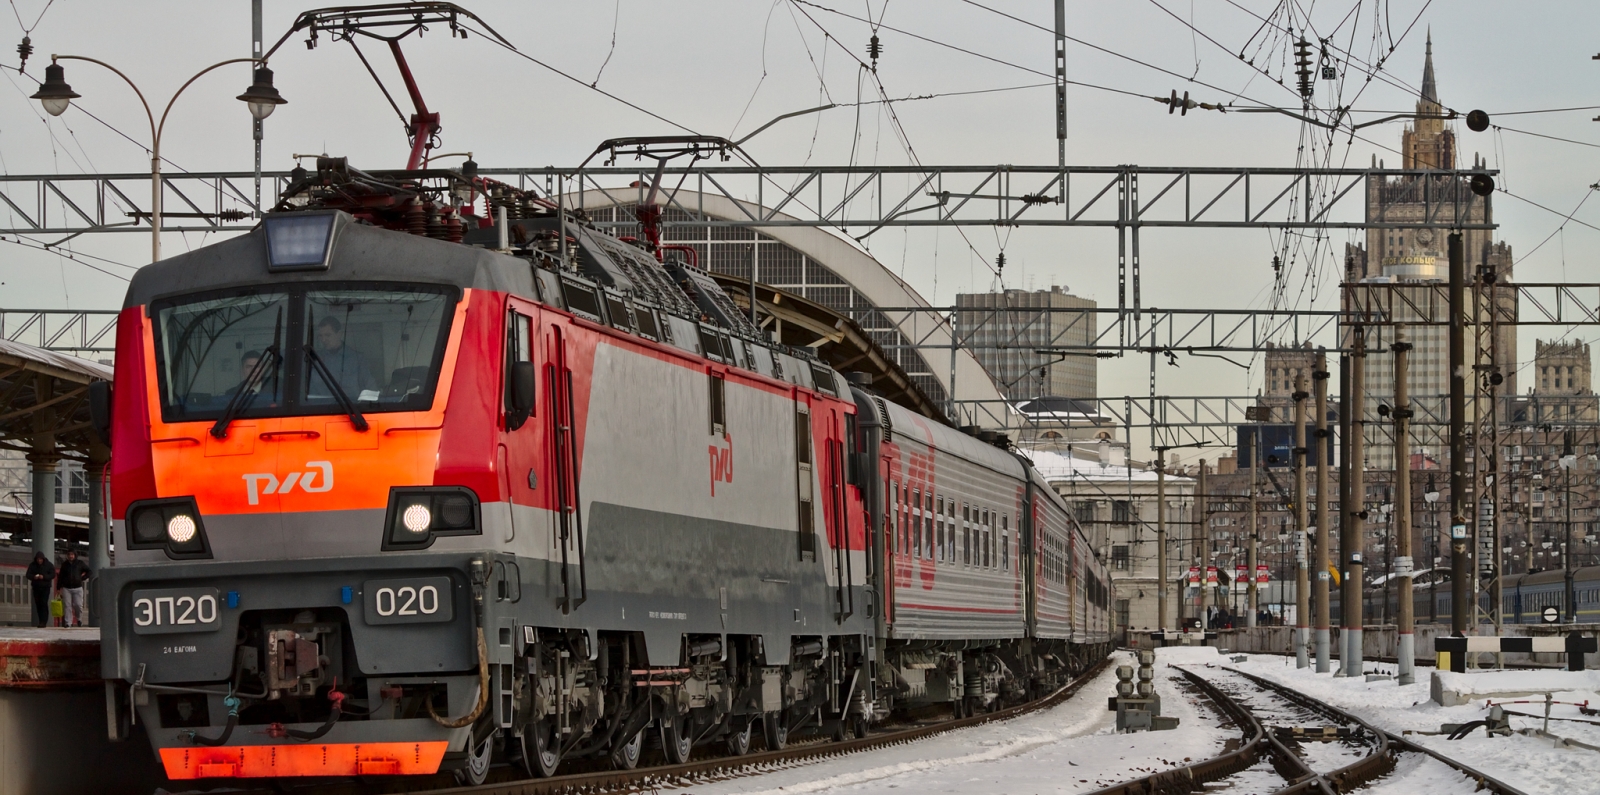 ЭП20-020 at Kiyevsky railway station in Moscow